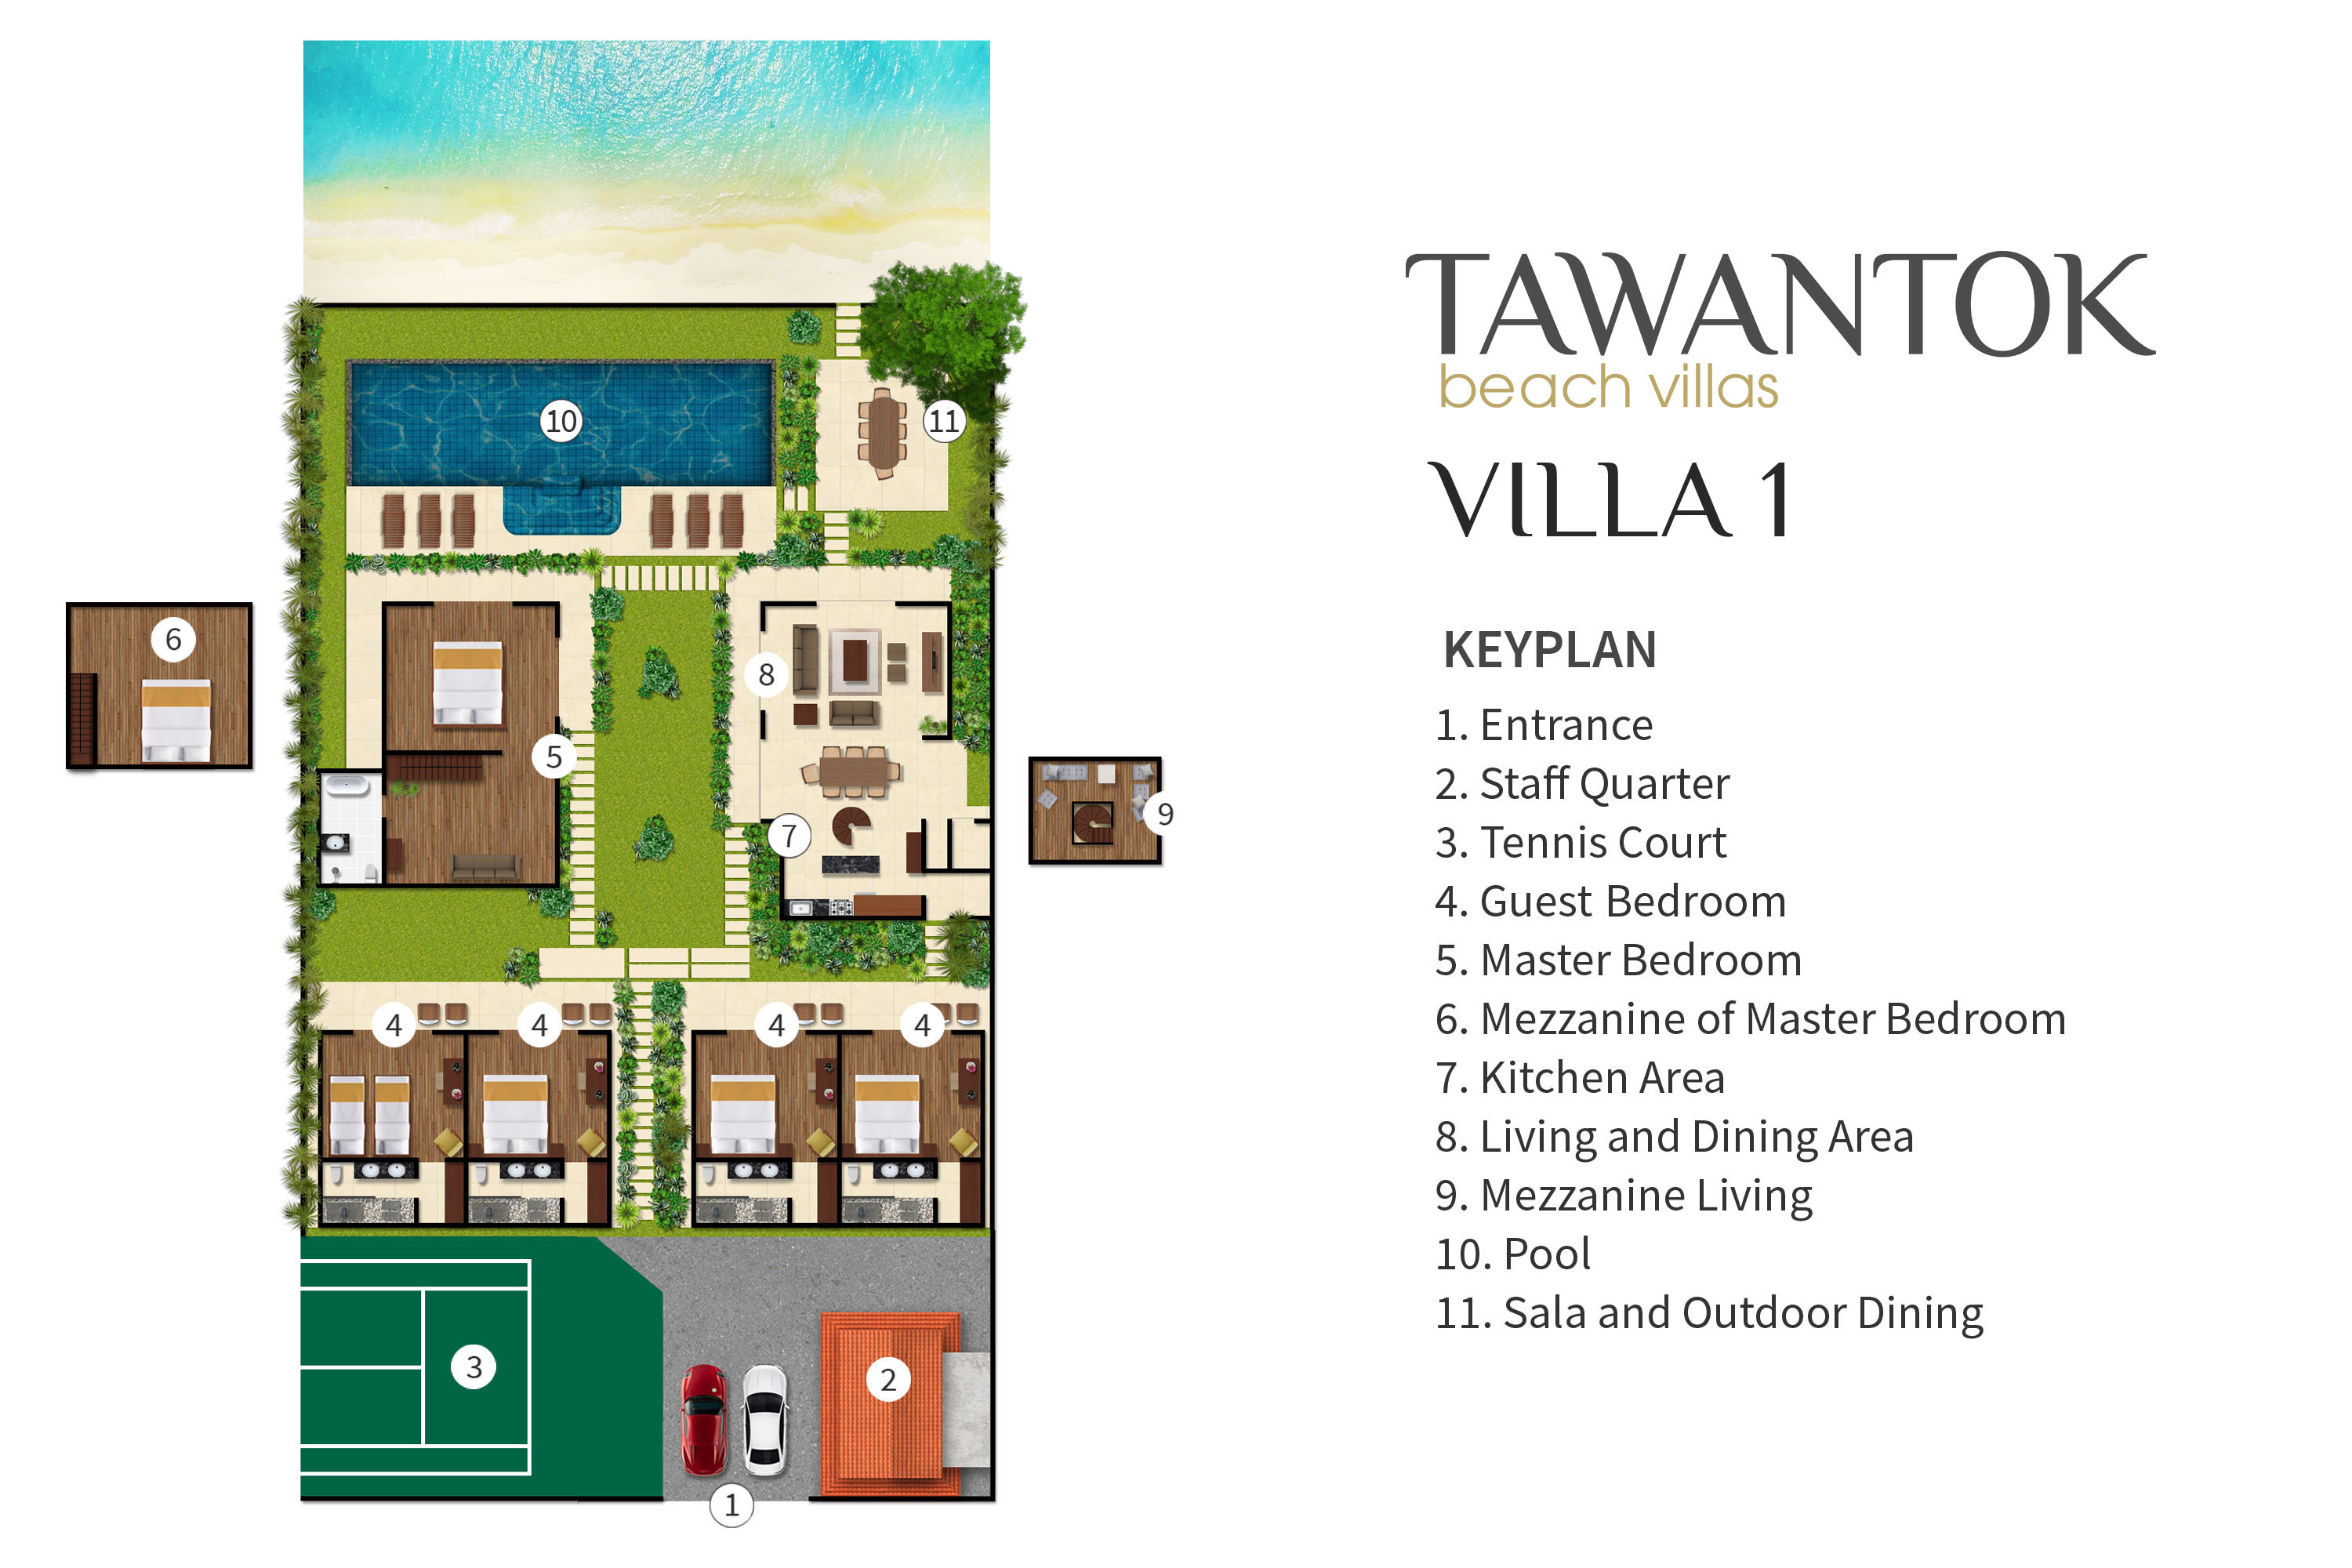 Tawantok Beach Villas – Villa 1